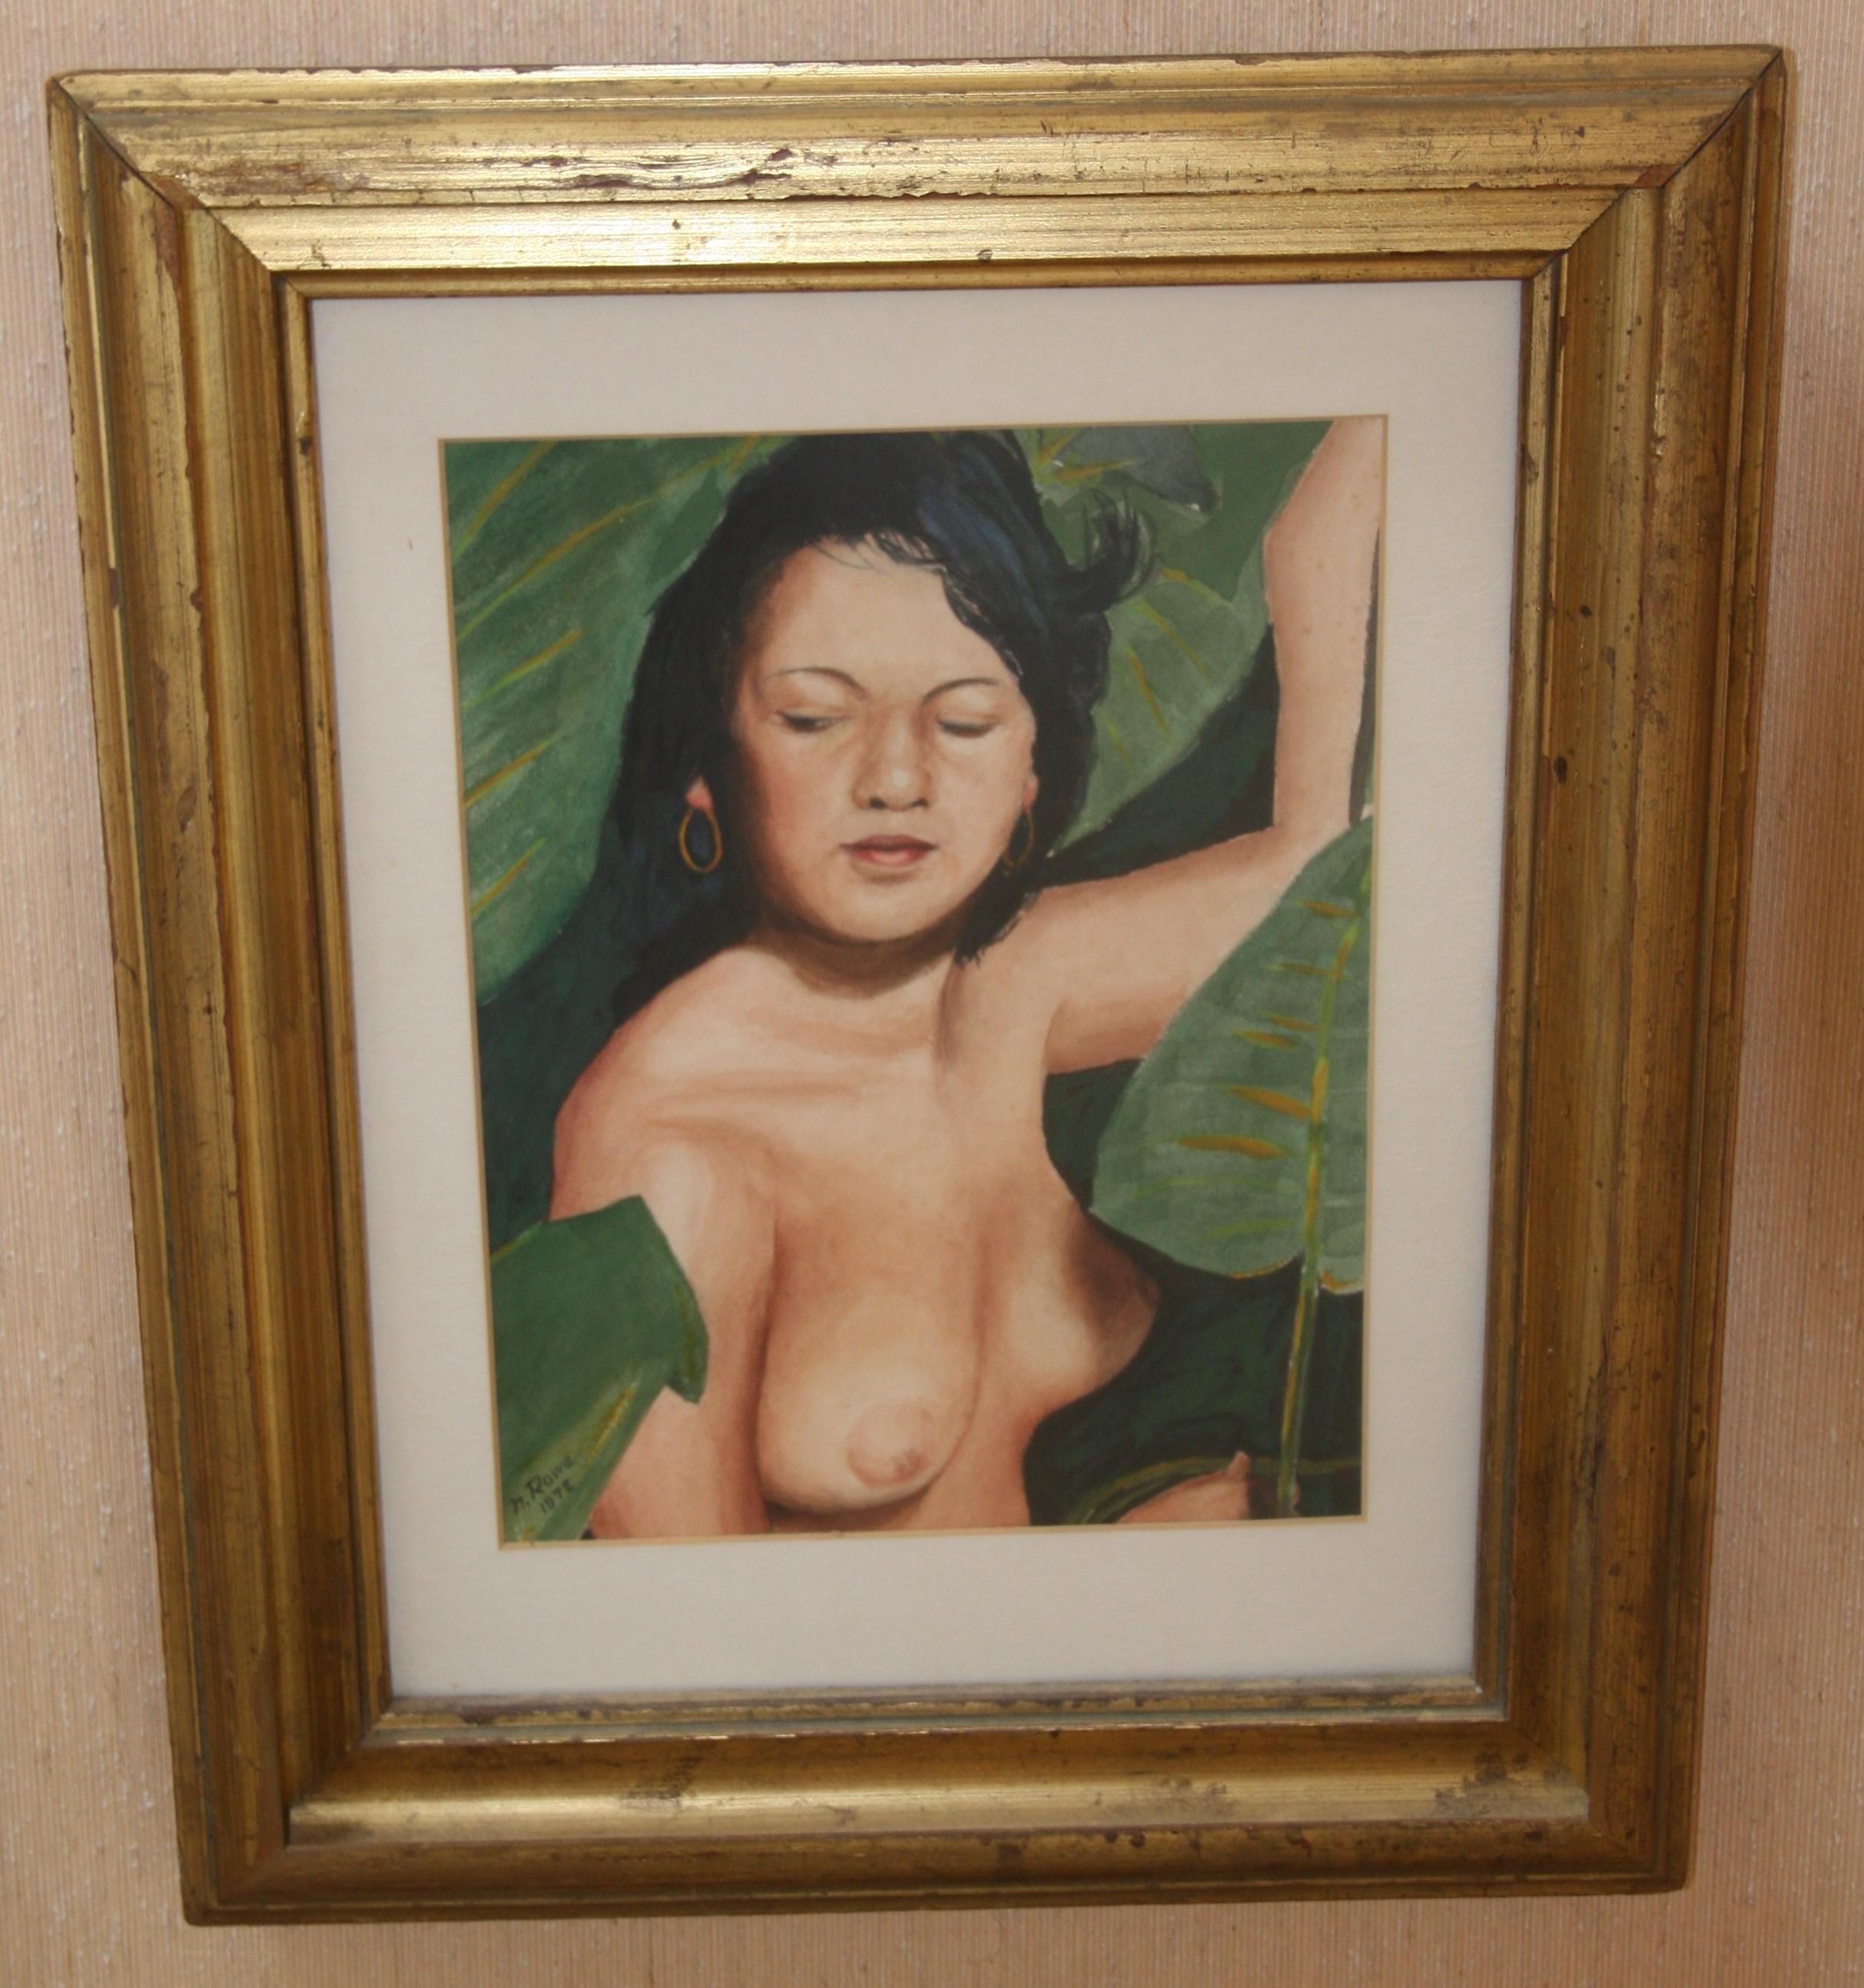 4068 Hawaiian exotic nude pastel painting
Image size 13.3x10.5